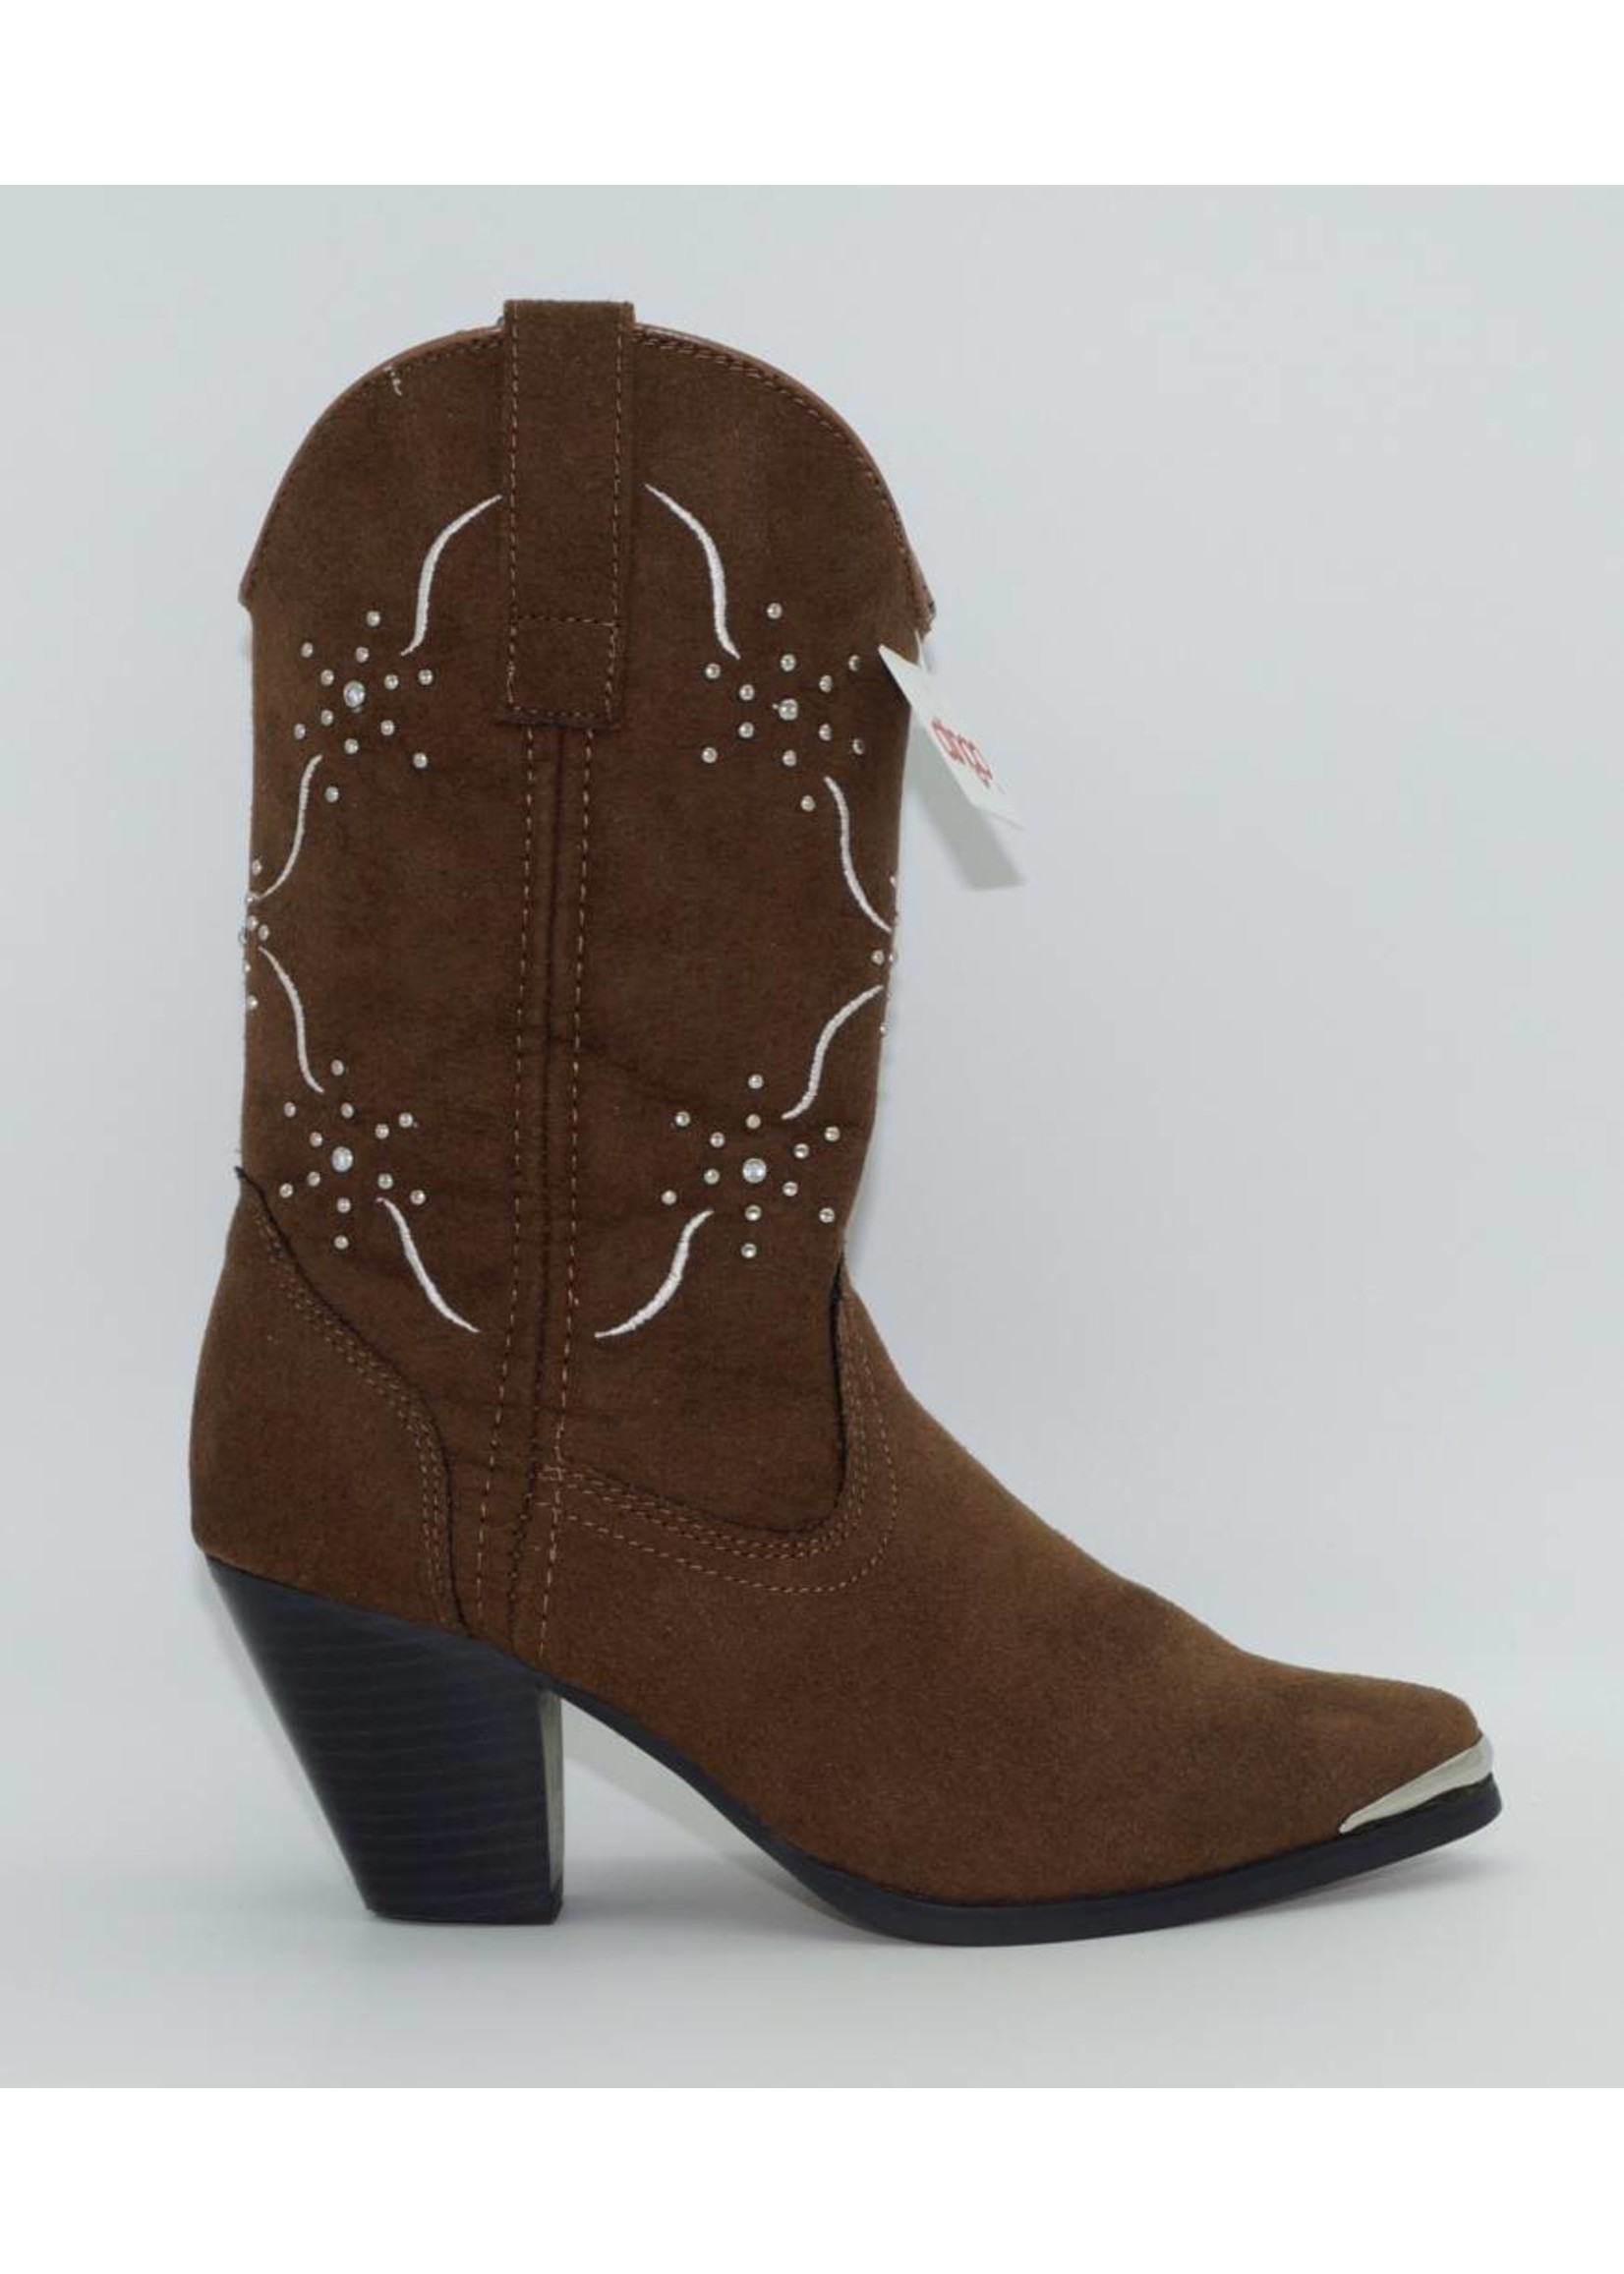 Dingo Women's Studded Brown Western Boot DI563